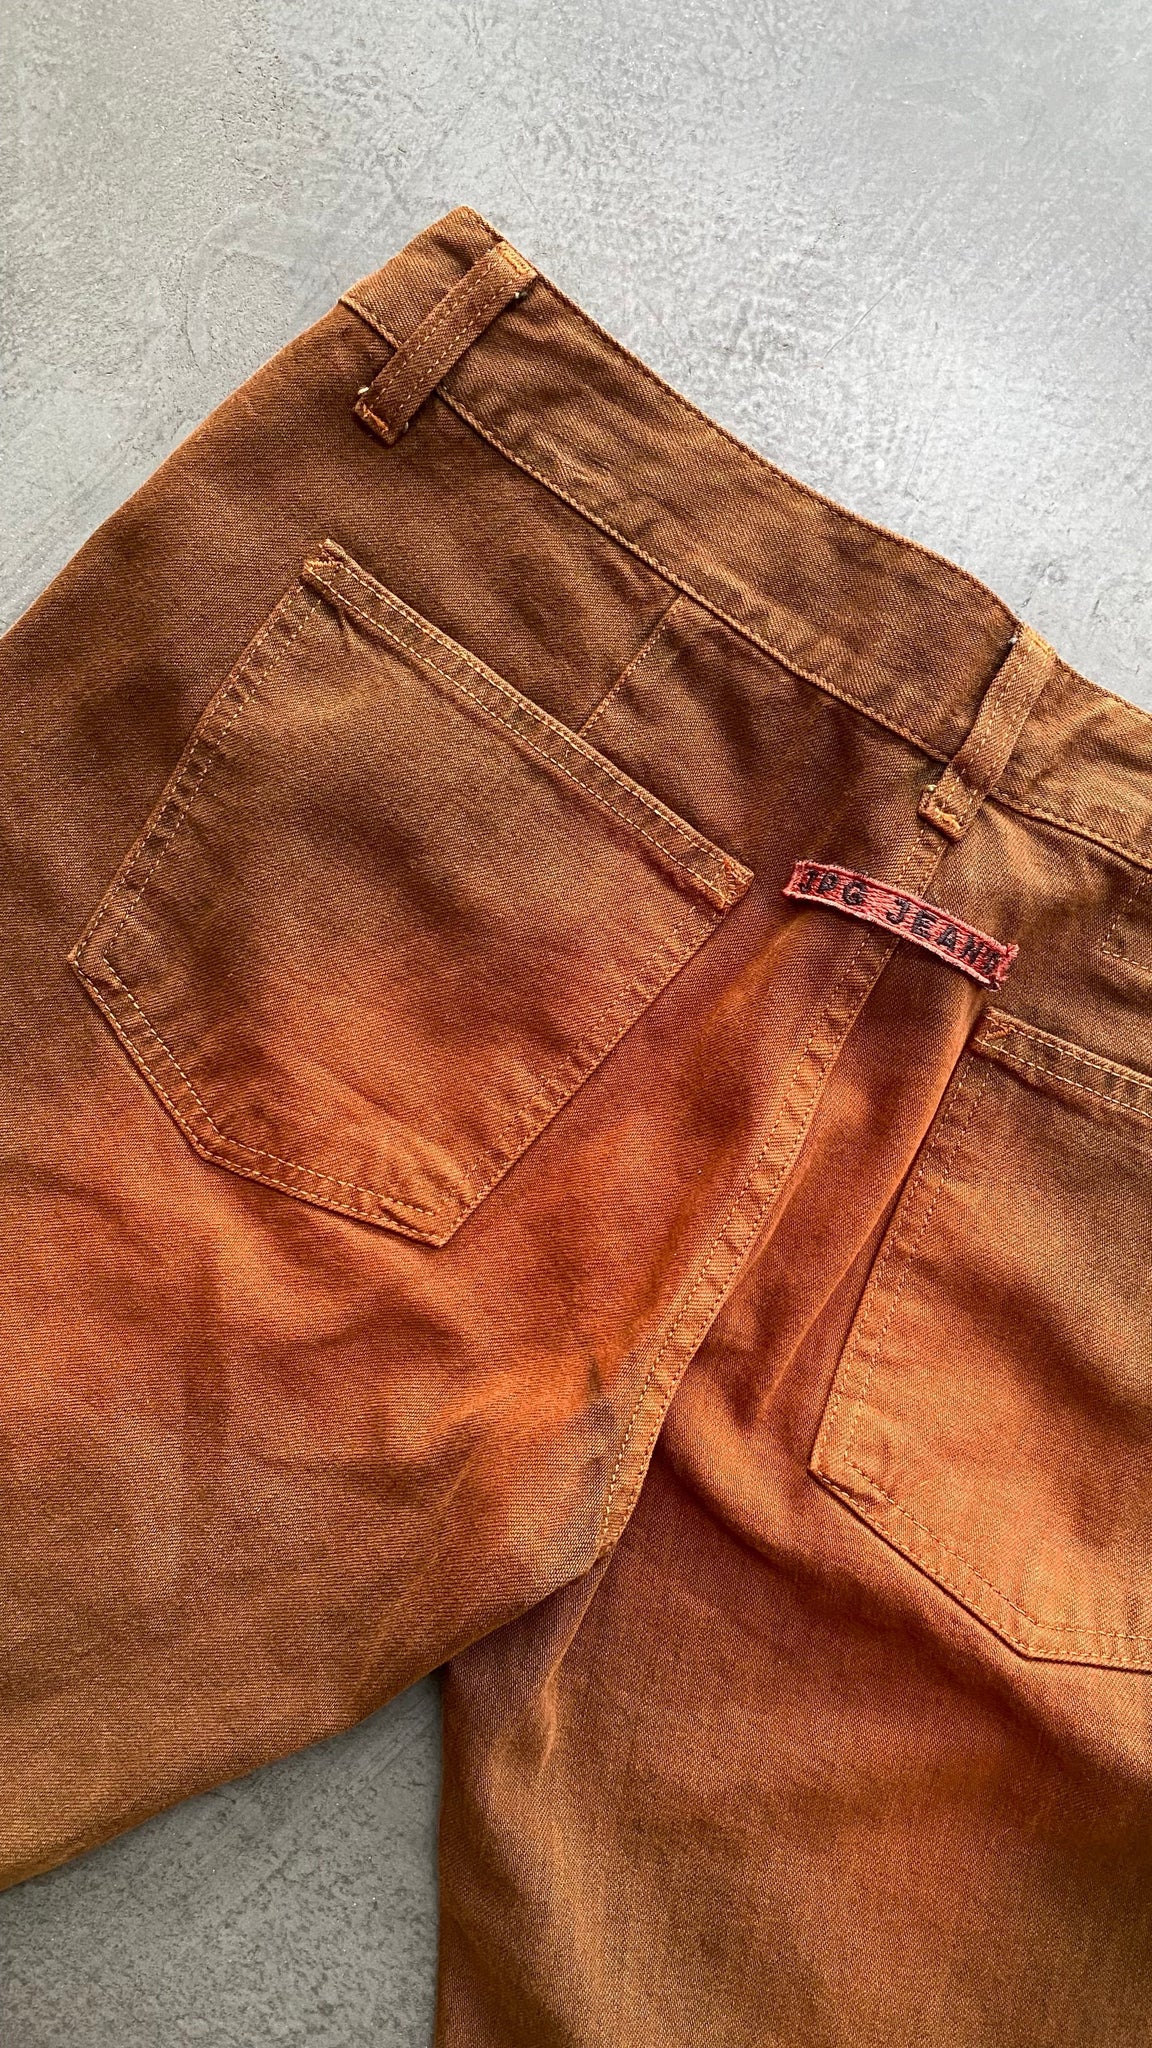 JPG Jeans Rust Effect Denim